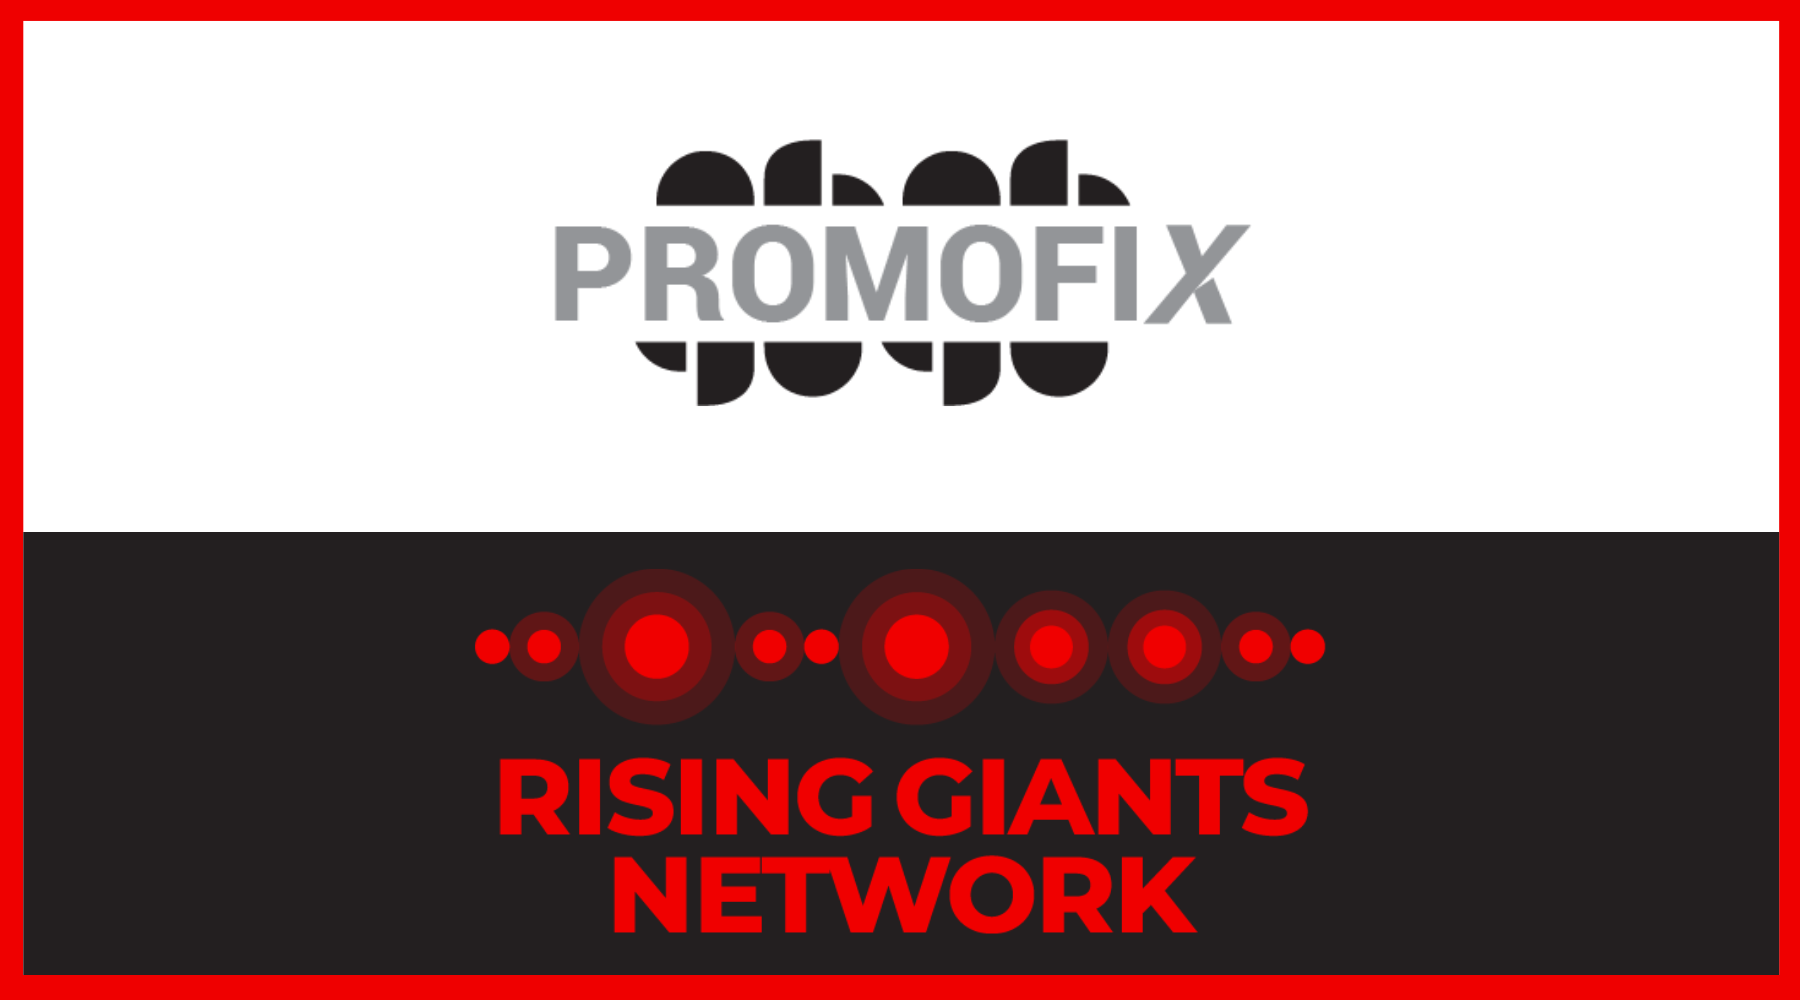 Promofix & Rising Giants Network Announce Strategic Partnership